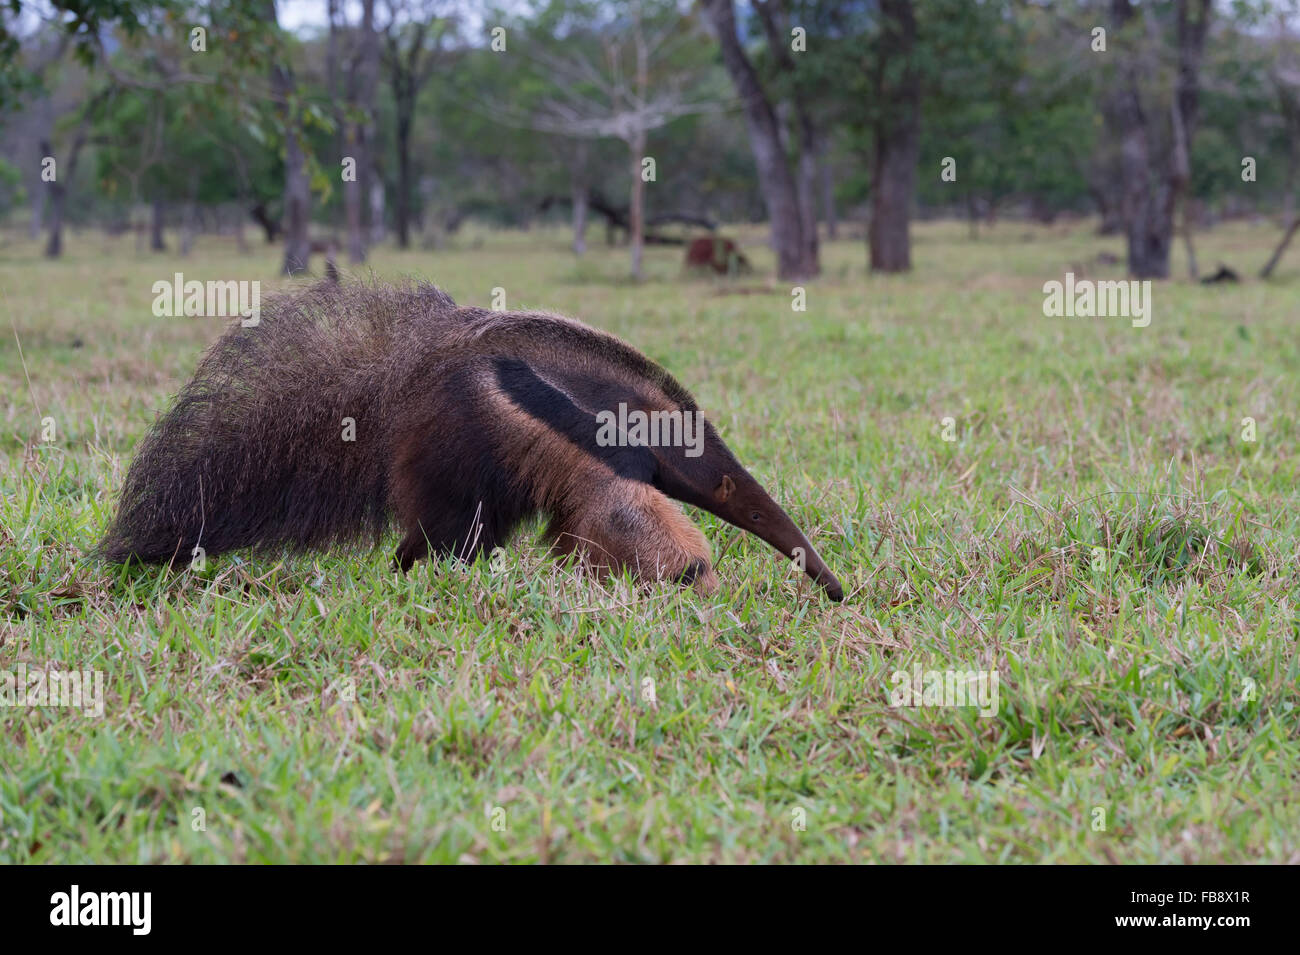 Oso hormiguero gigante (Myrmecophaga tridactyla), Mato Grosso, Brasil Foto de stock